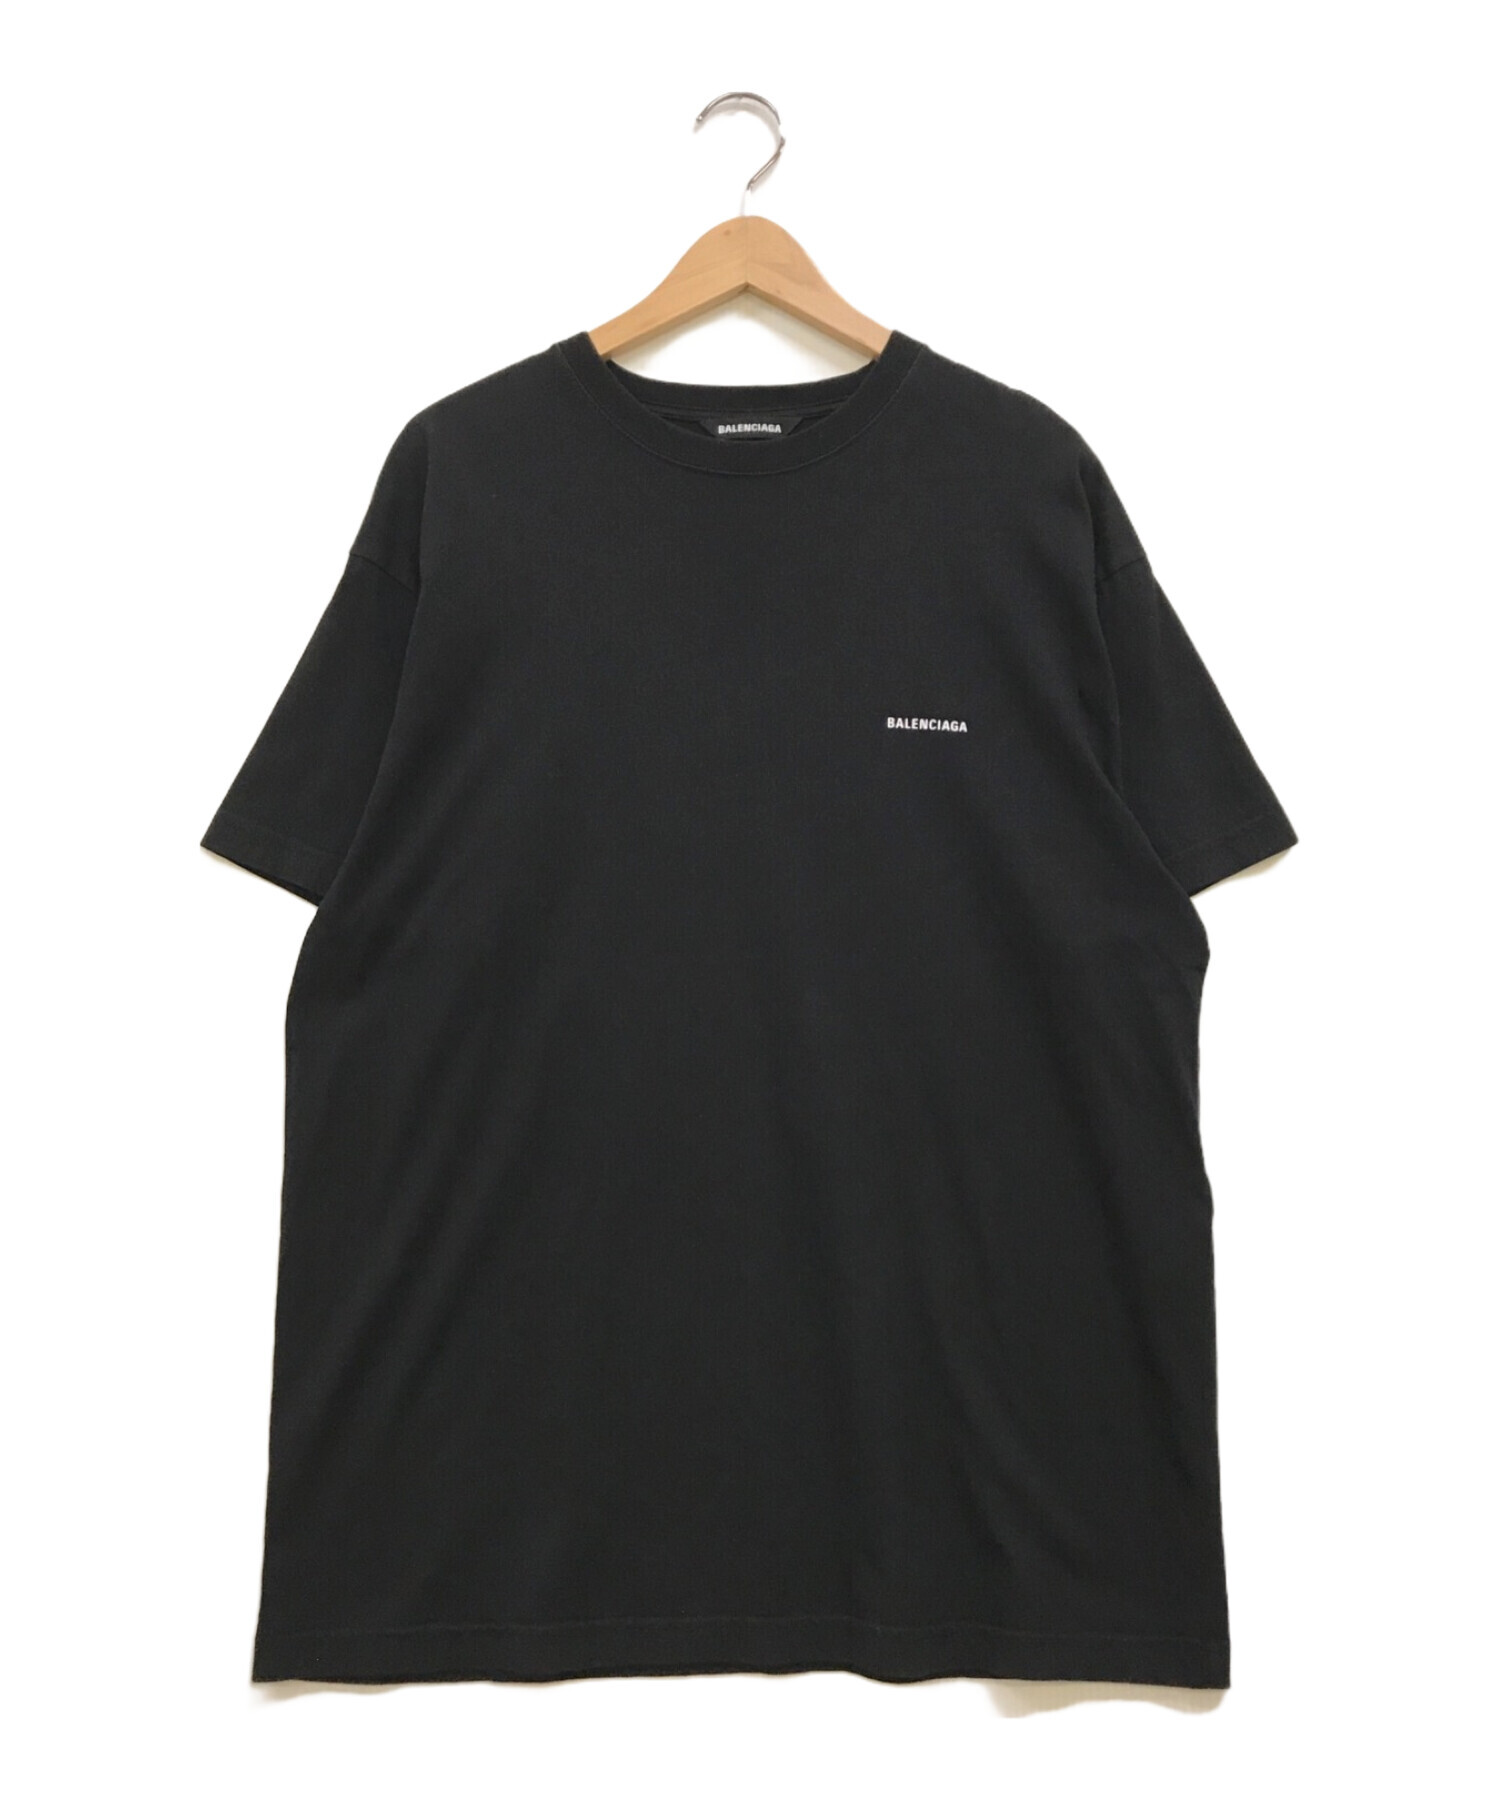 BALENCIAGA (バレンシアガ) スモールロゴTシャツ ブラック サイズ:S